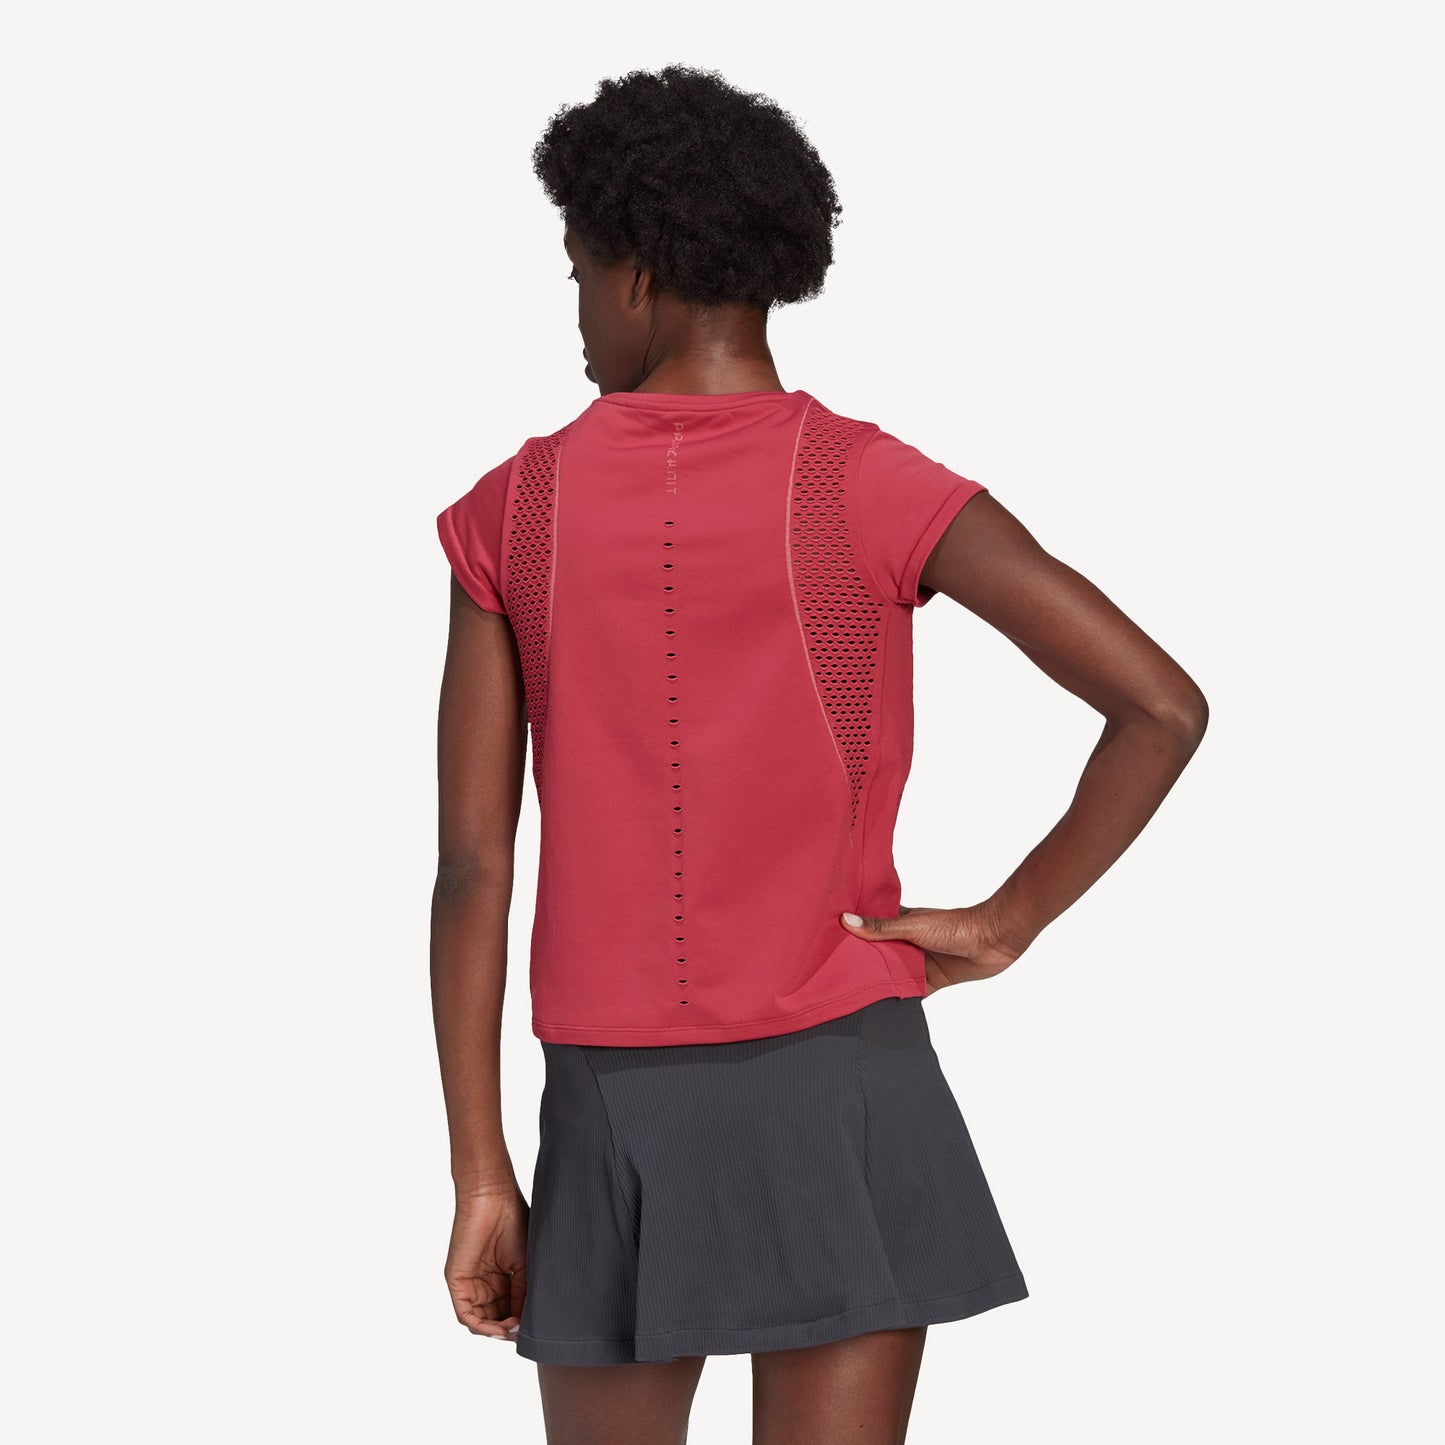 adidas Primeknit Primeblue Women's Tennis Shirt Pink (2)